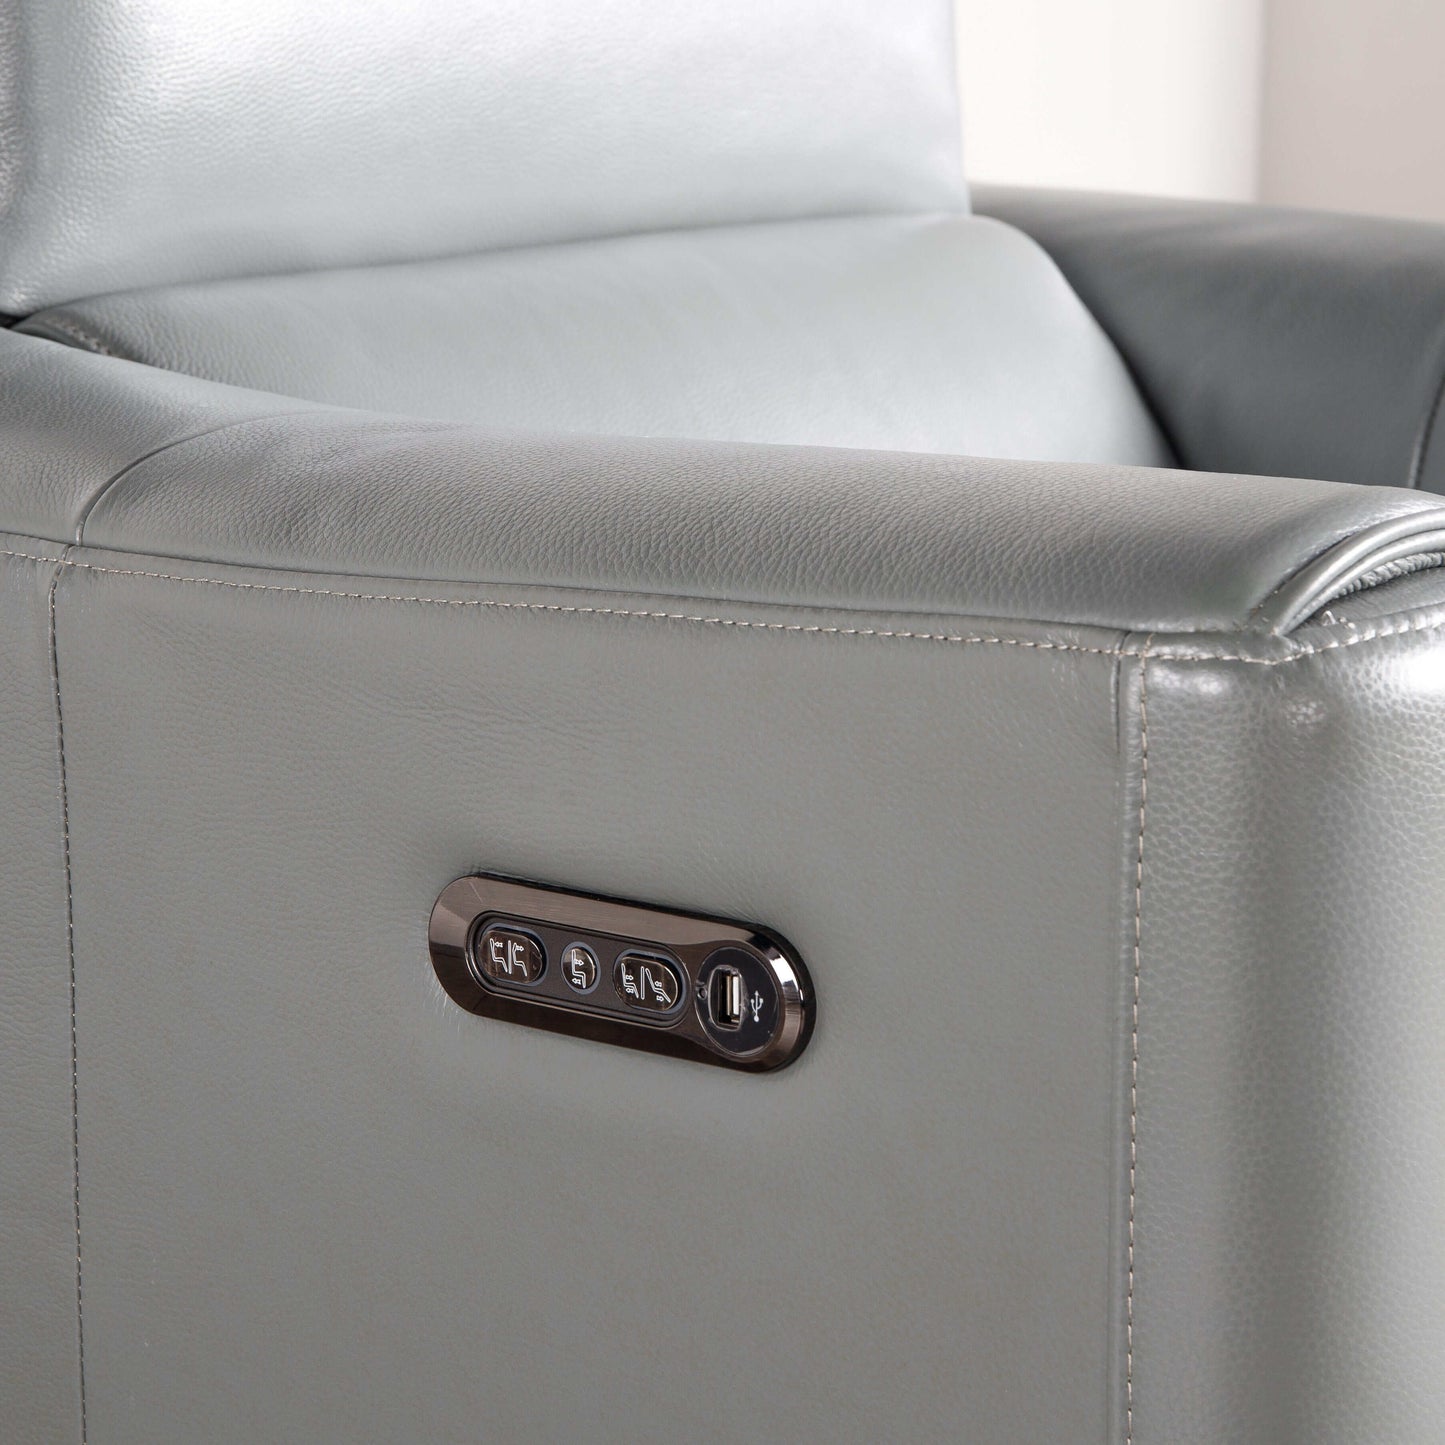 Furniture  -  Comfort King Ozark 3 Seat Electric Reclining Sofa  -  50153195